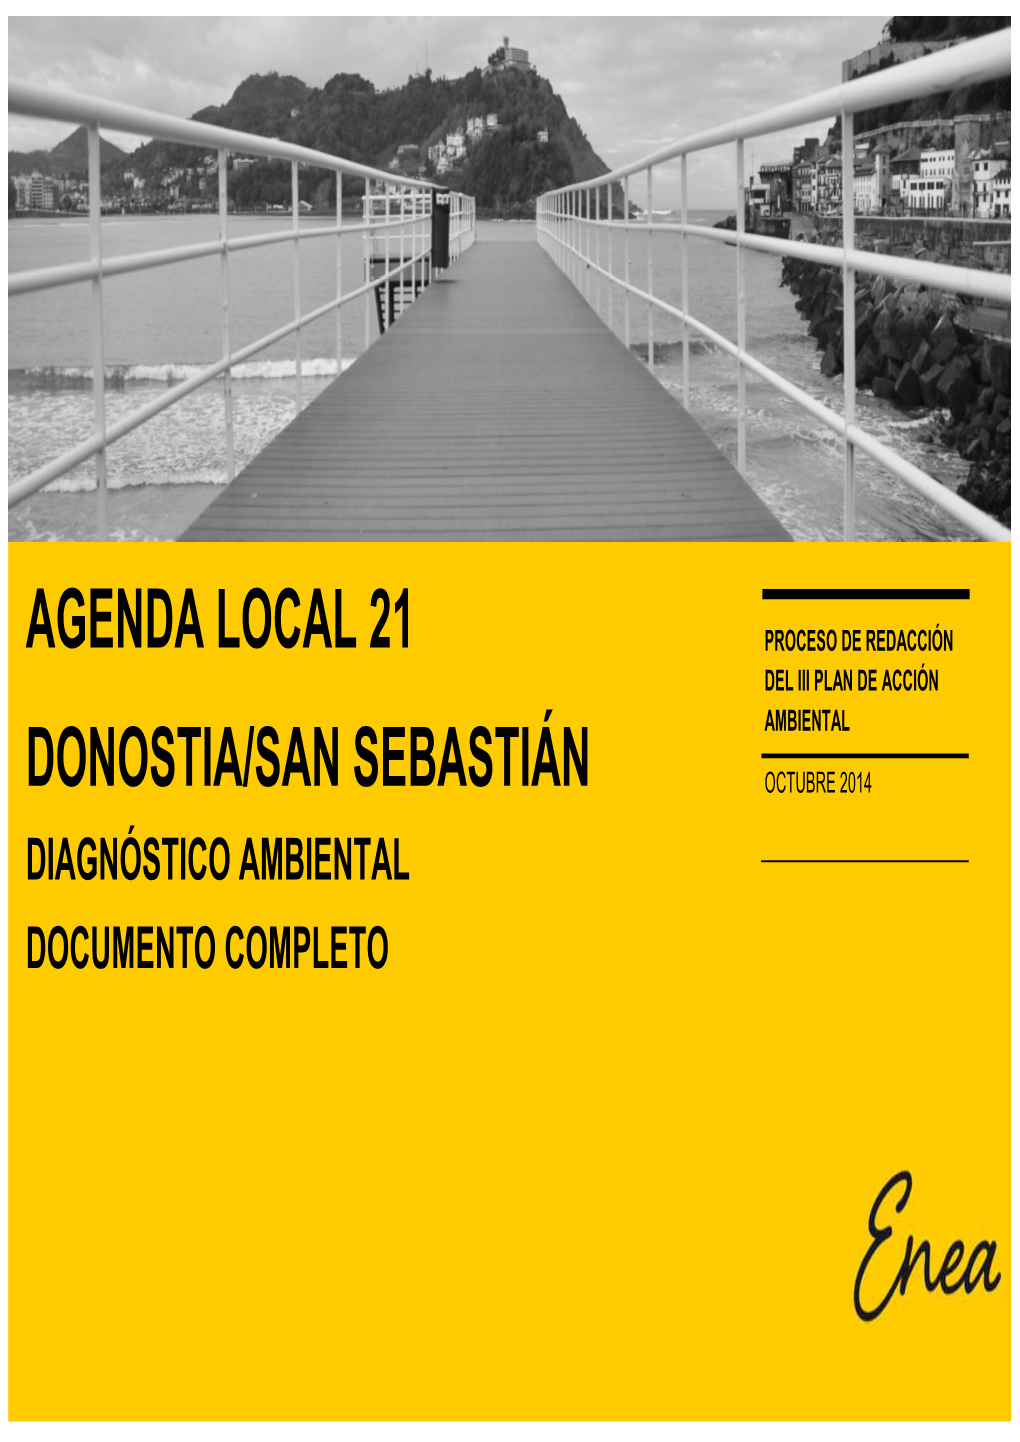 Agenda Local 21 Donostia/San Sebastián